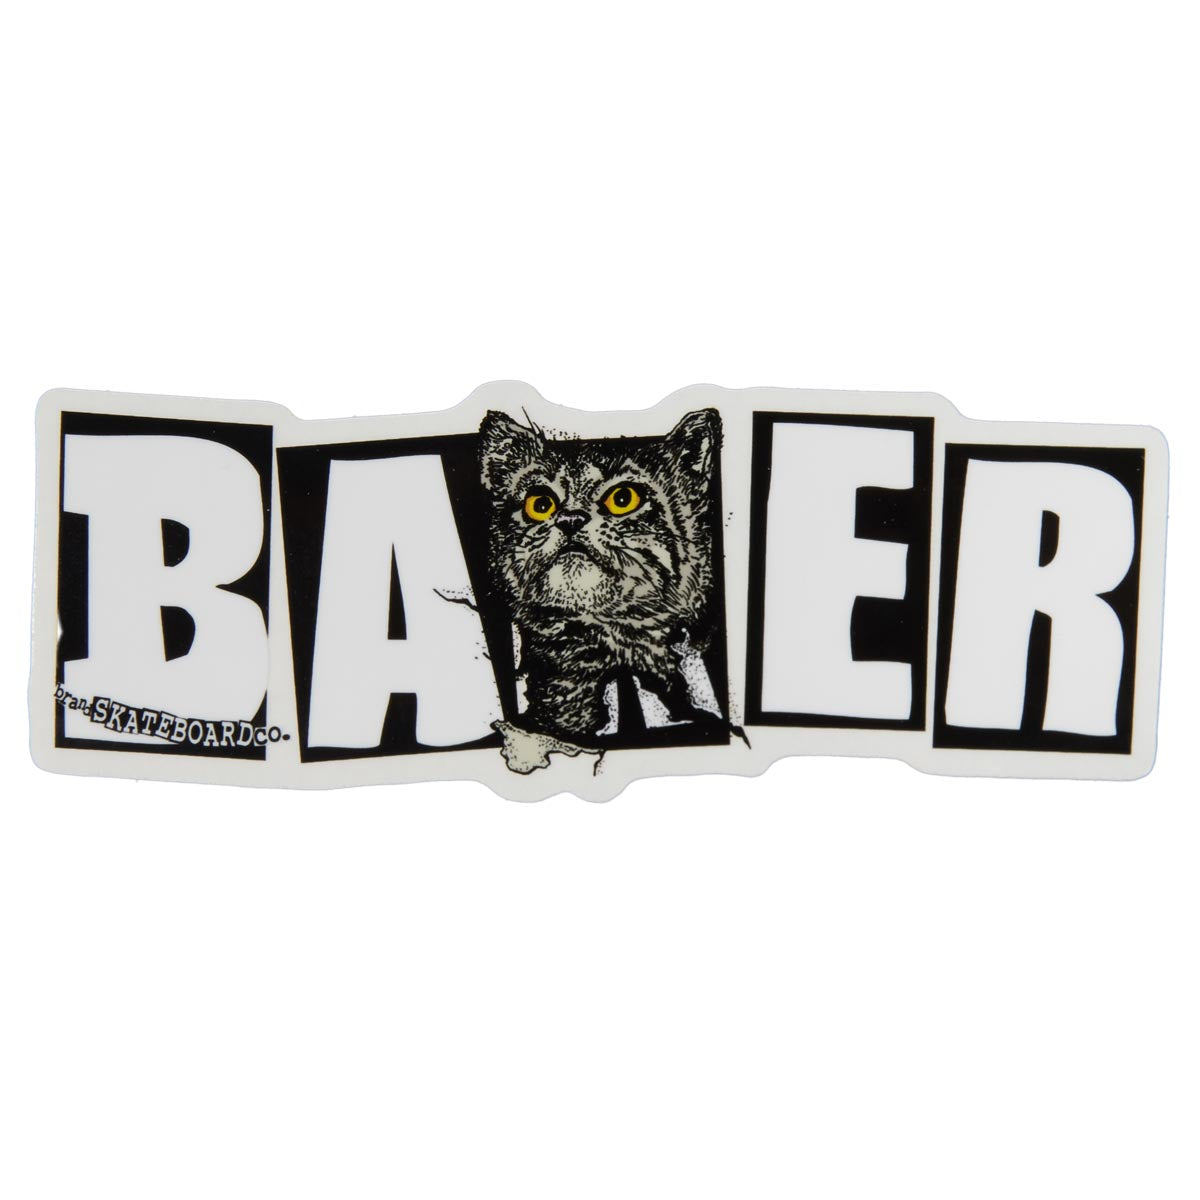 Baker Emergers Sticker - Rowan image 1